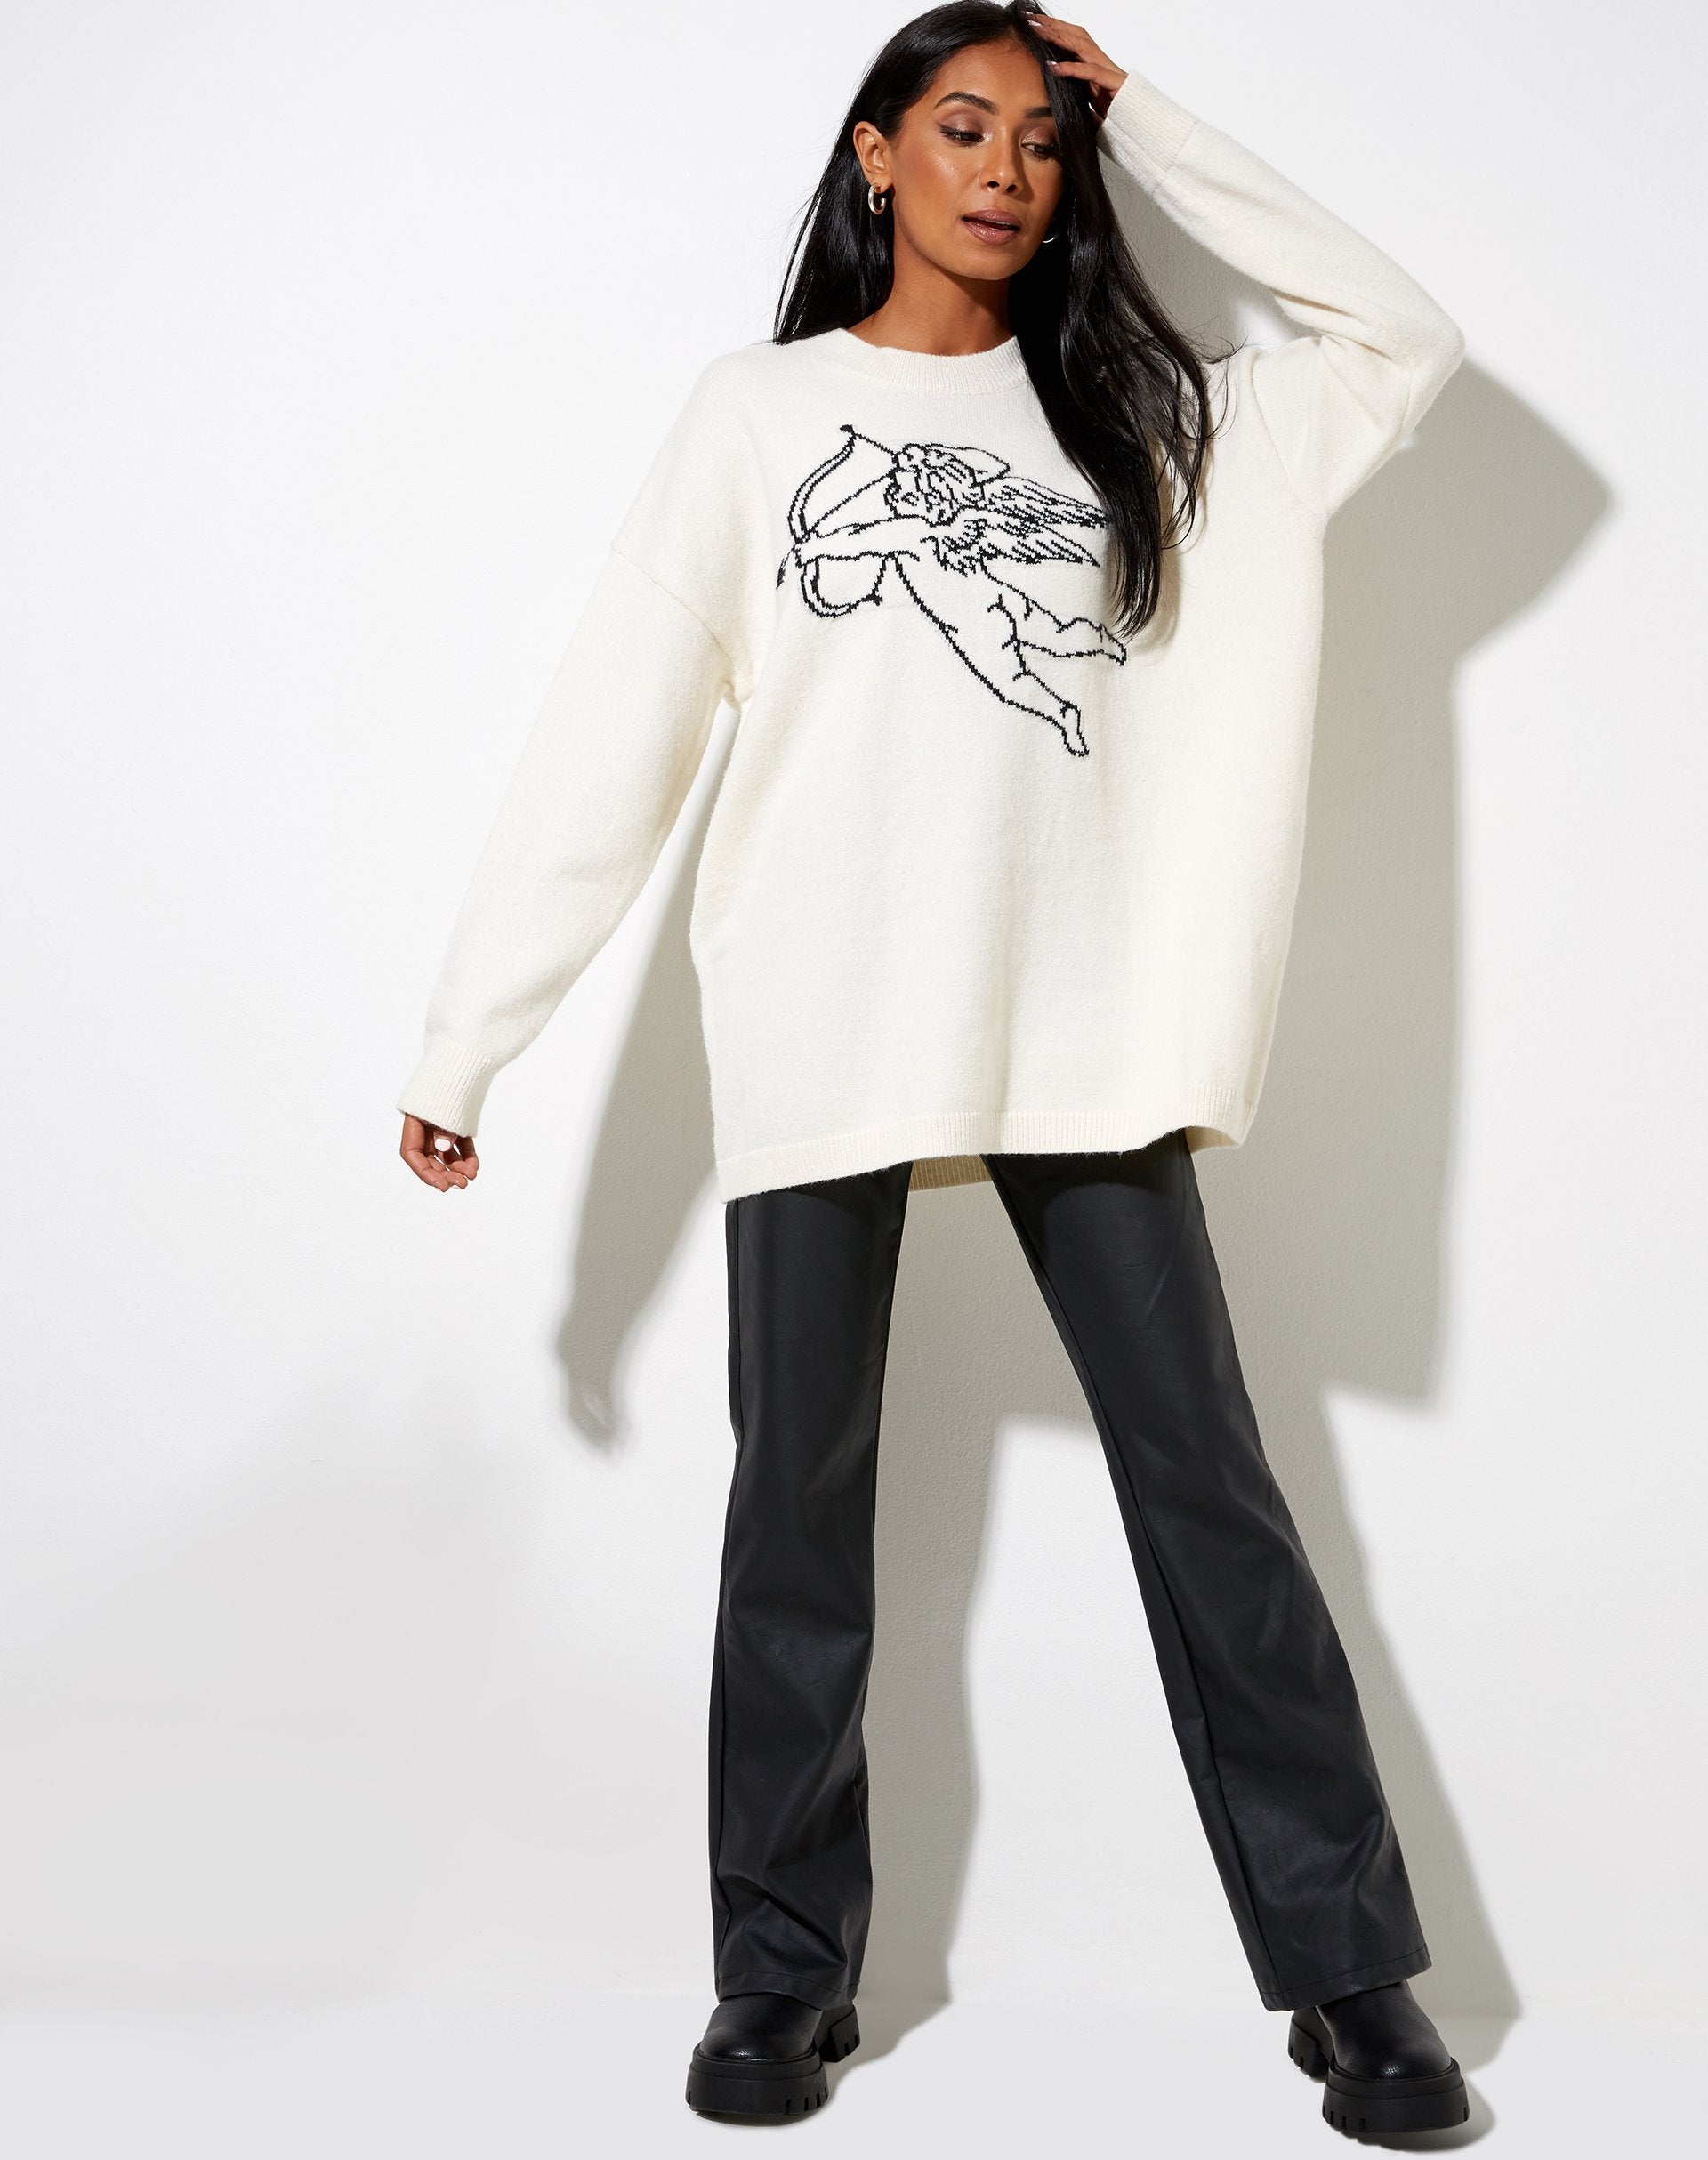 White Knitted Jumper with Black Cherub | Lulees – motelrocks-com-us